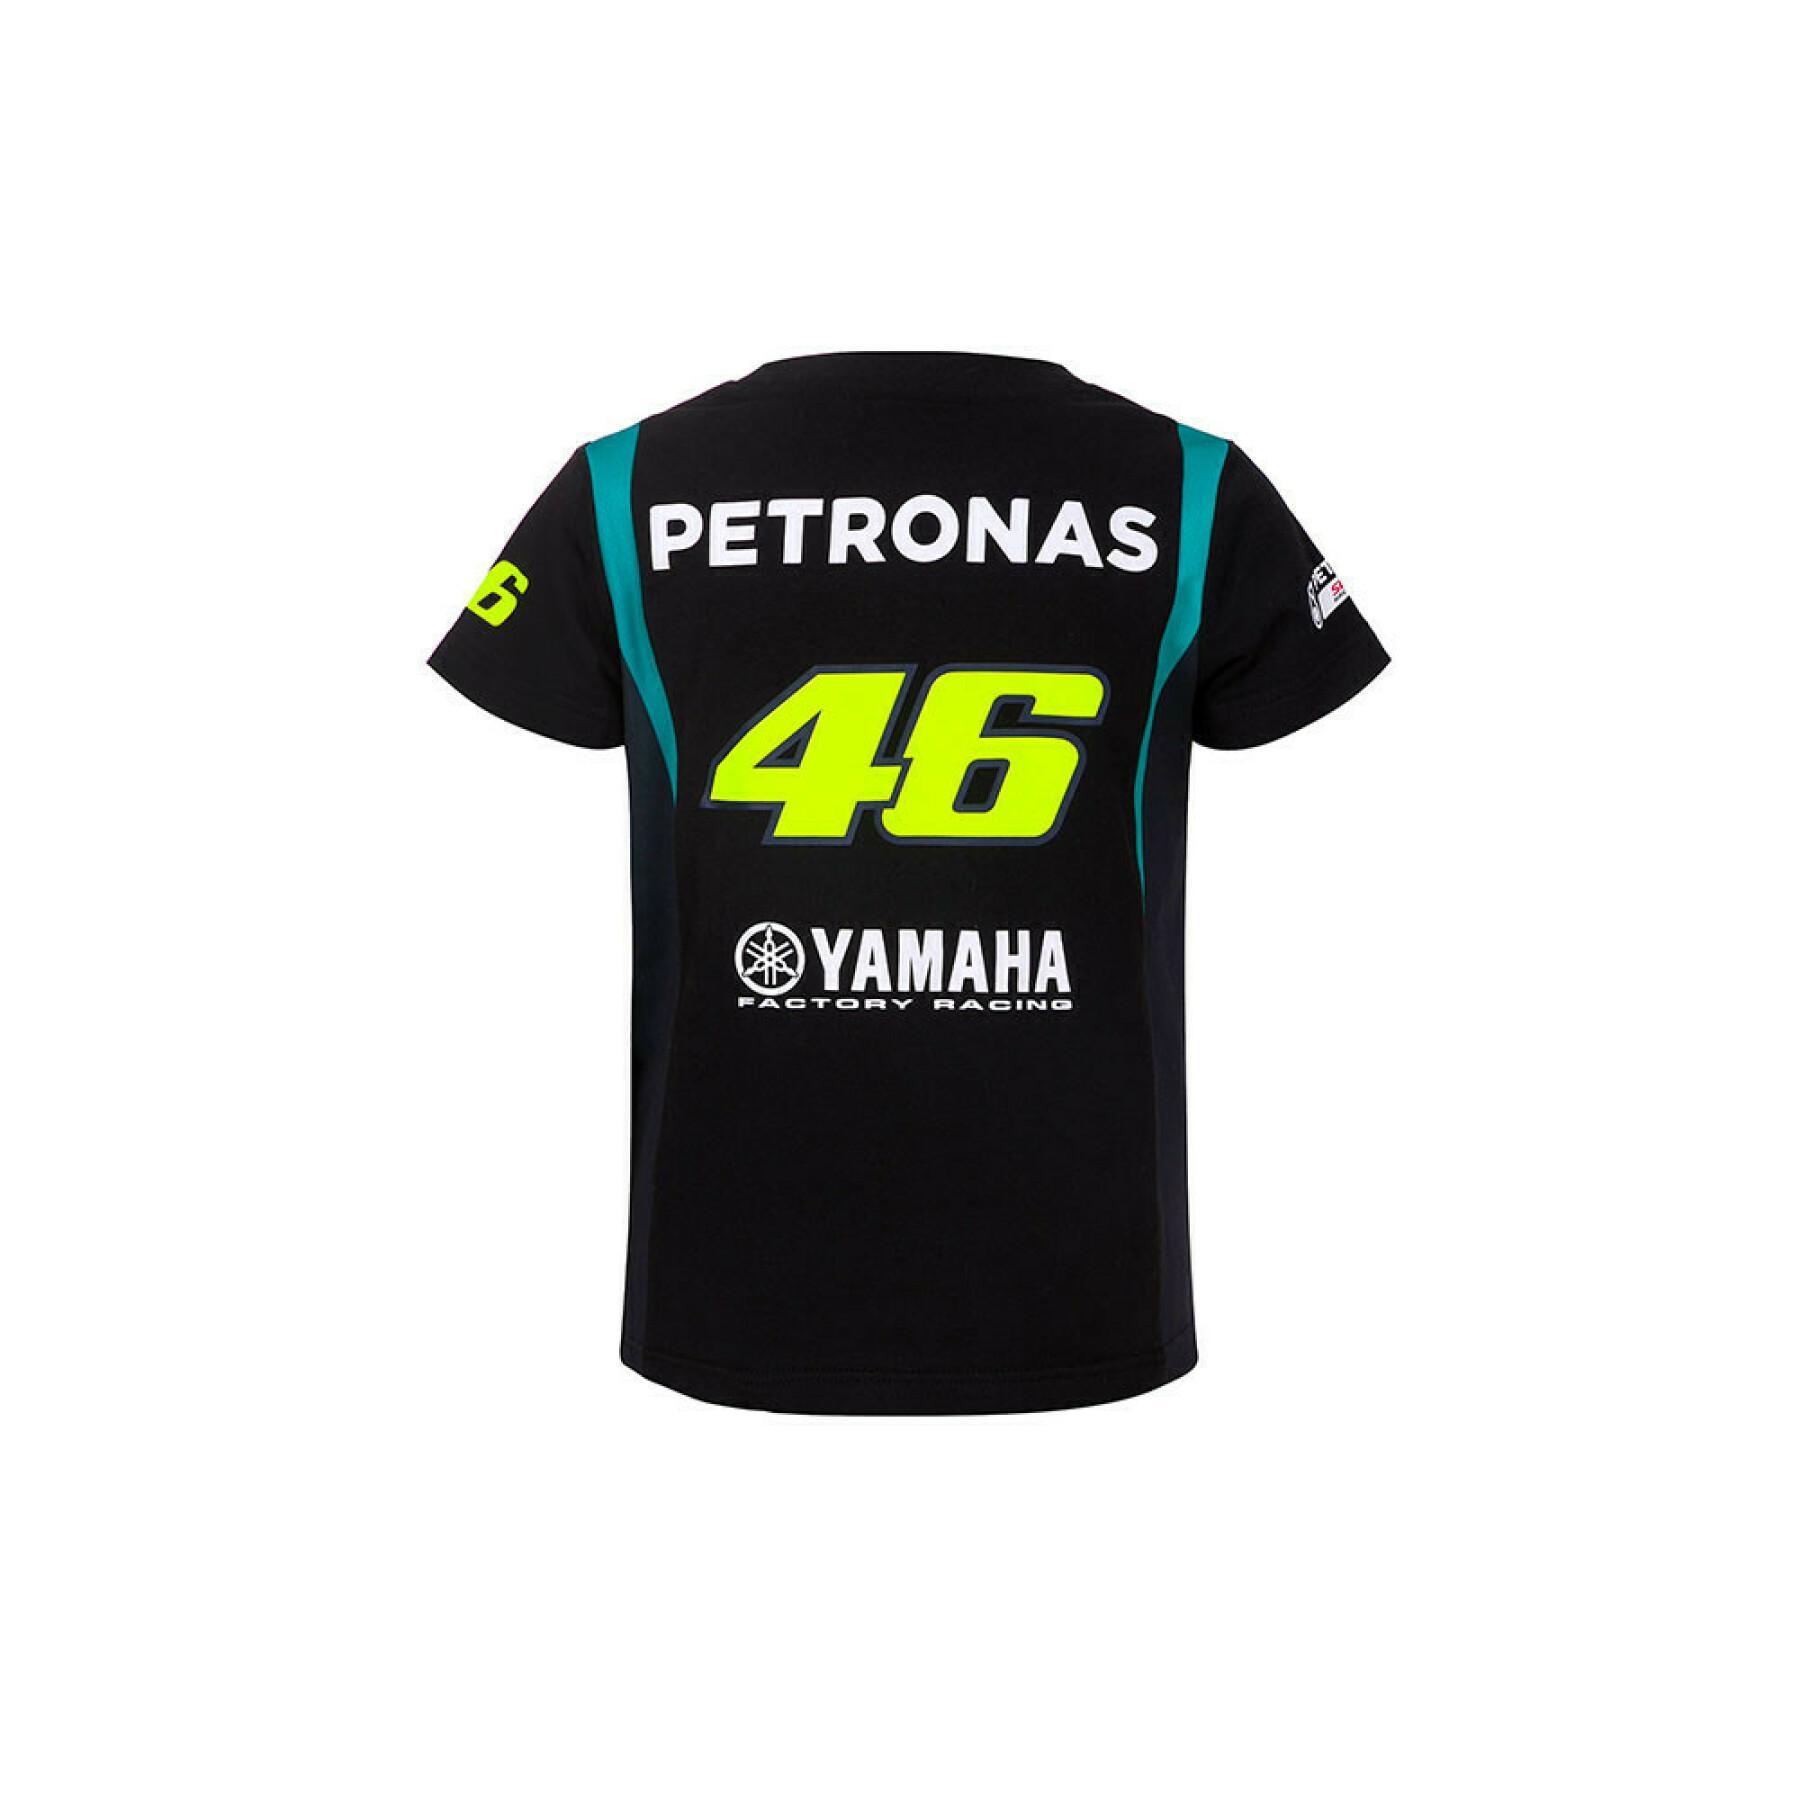 Kinder-T-shirt VRl46 Petronas dual